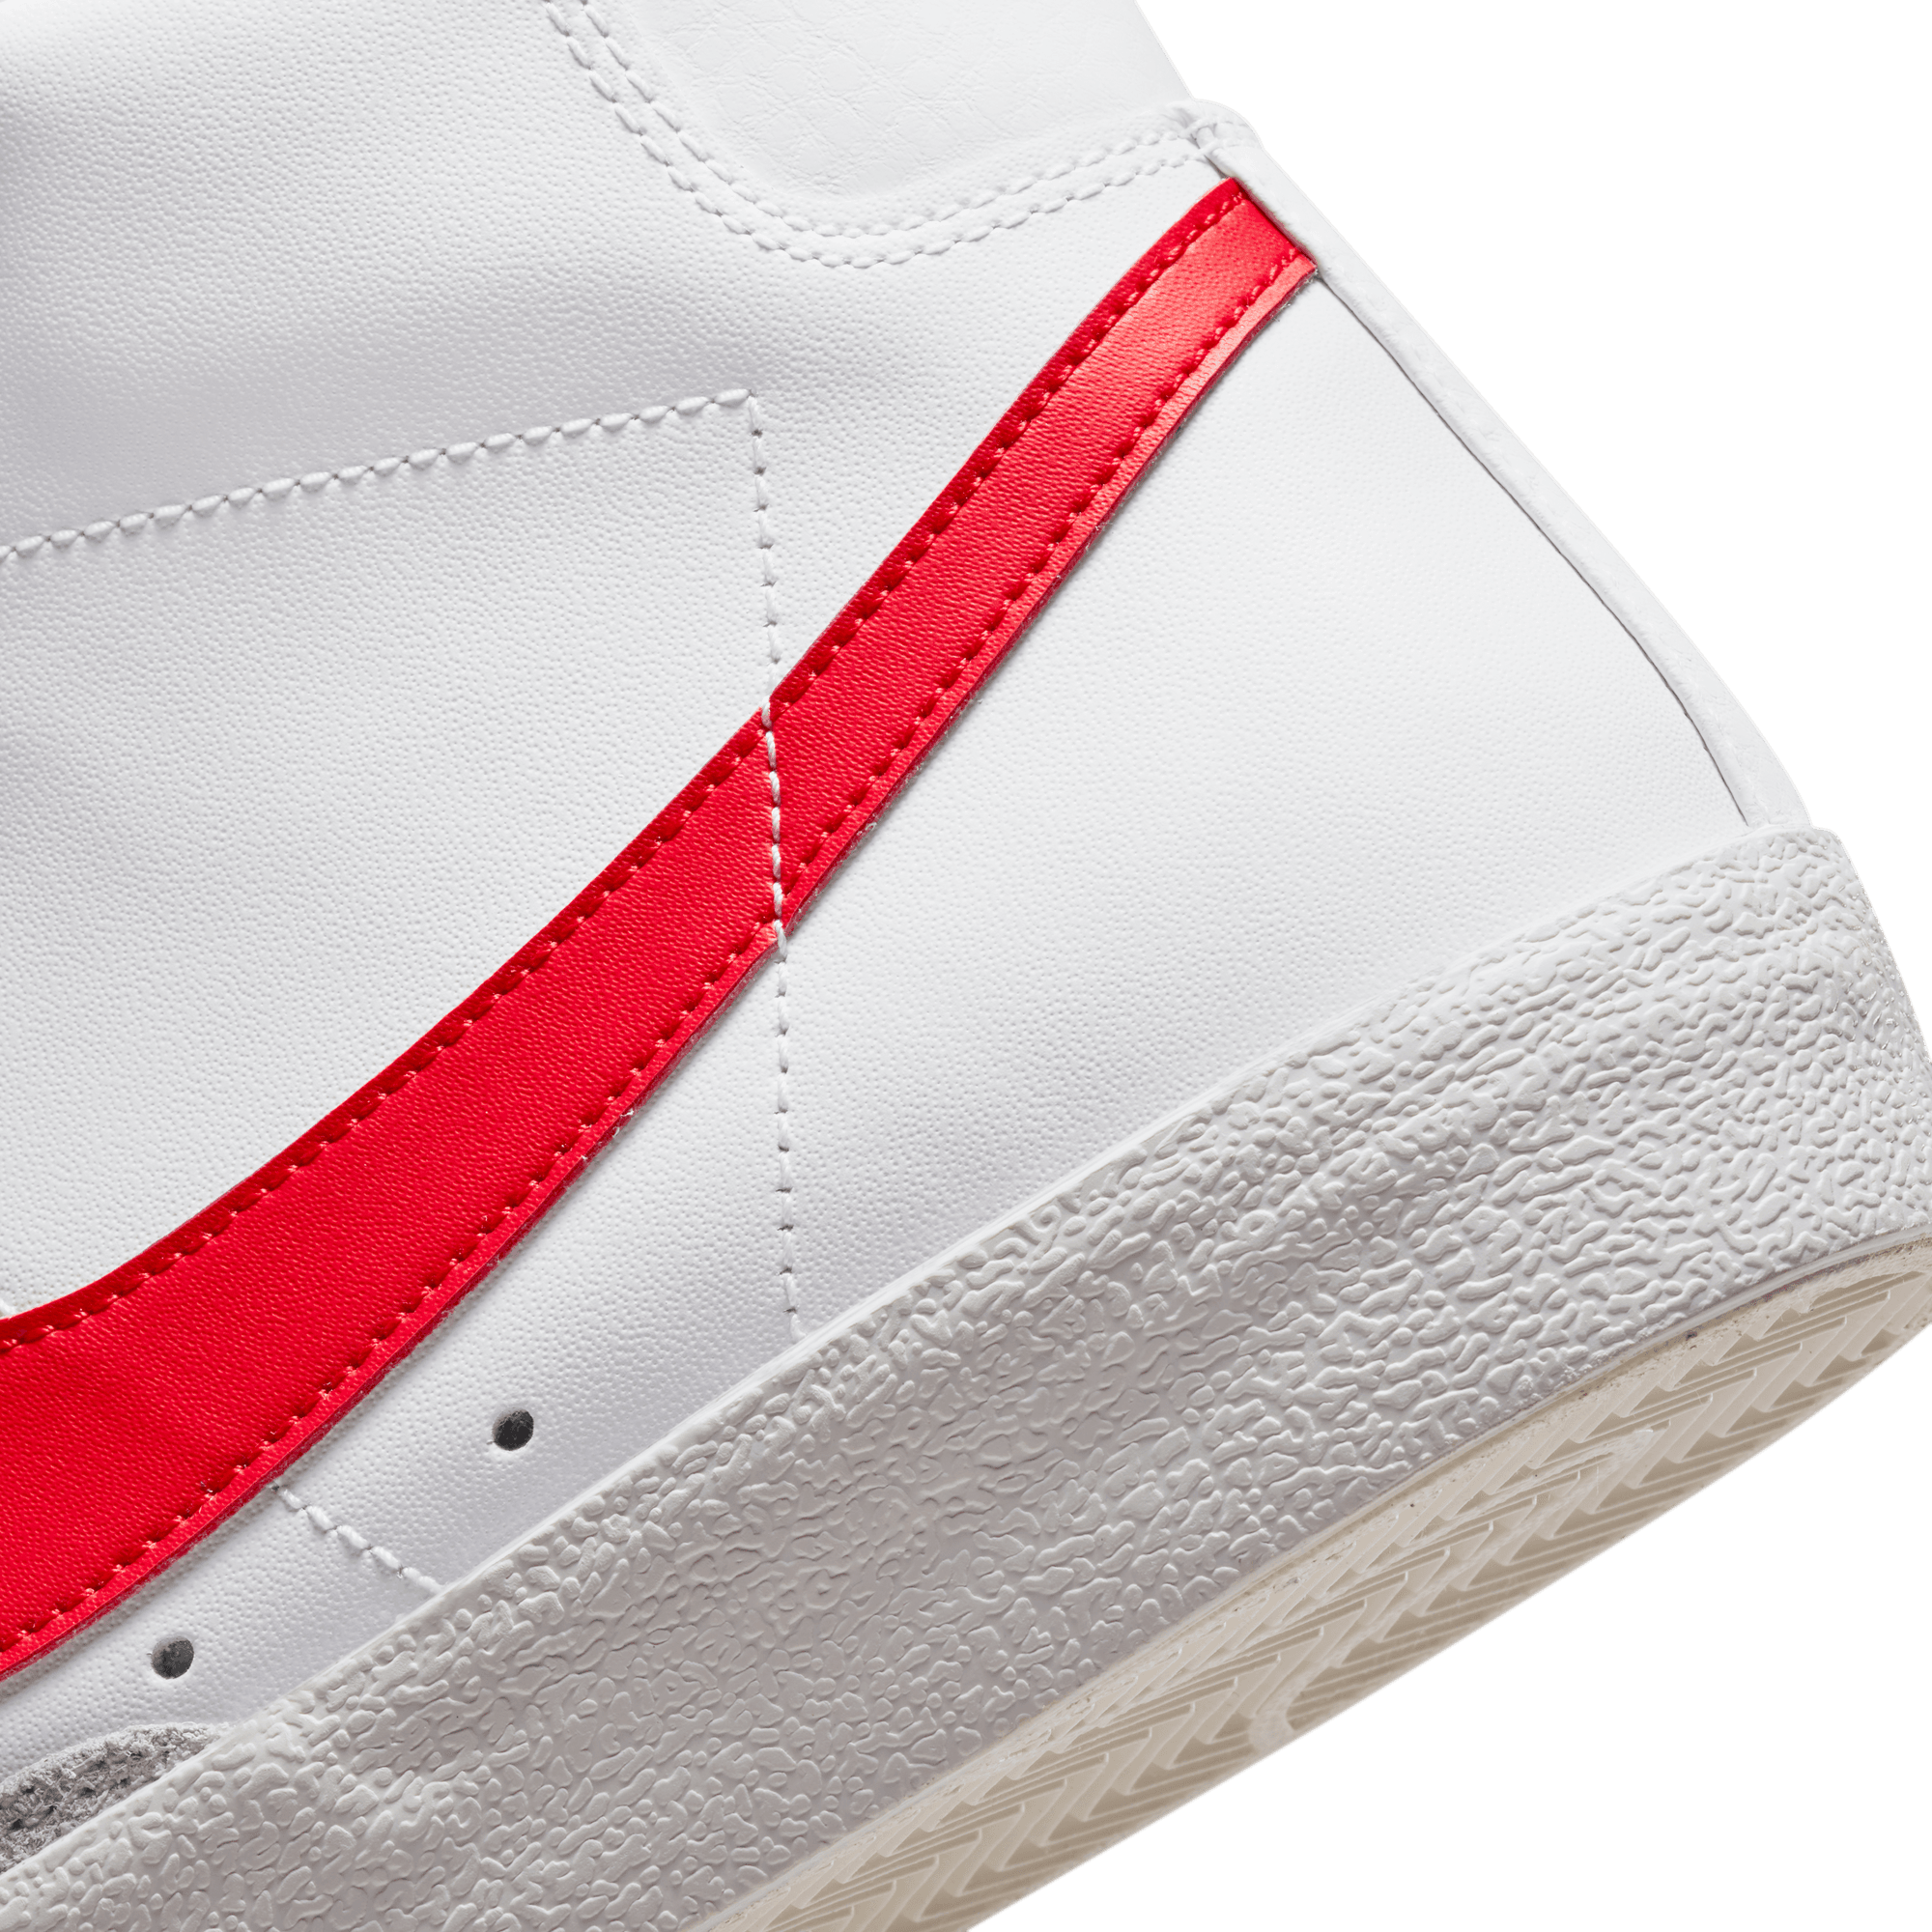 Nike Blazer Mid '77 Vintage 'White/Red/Blue'